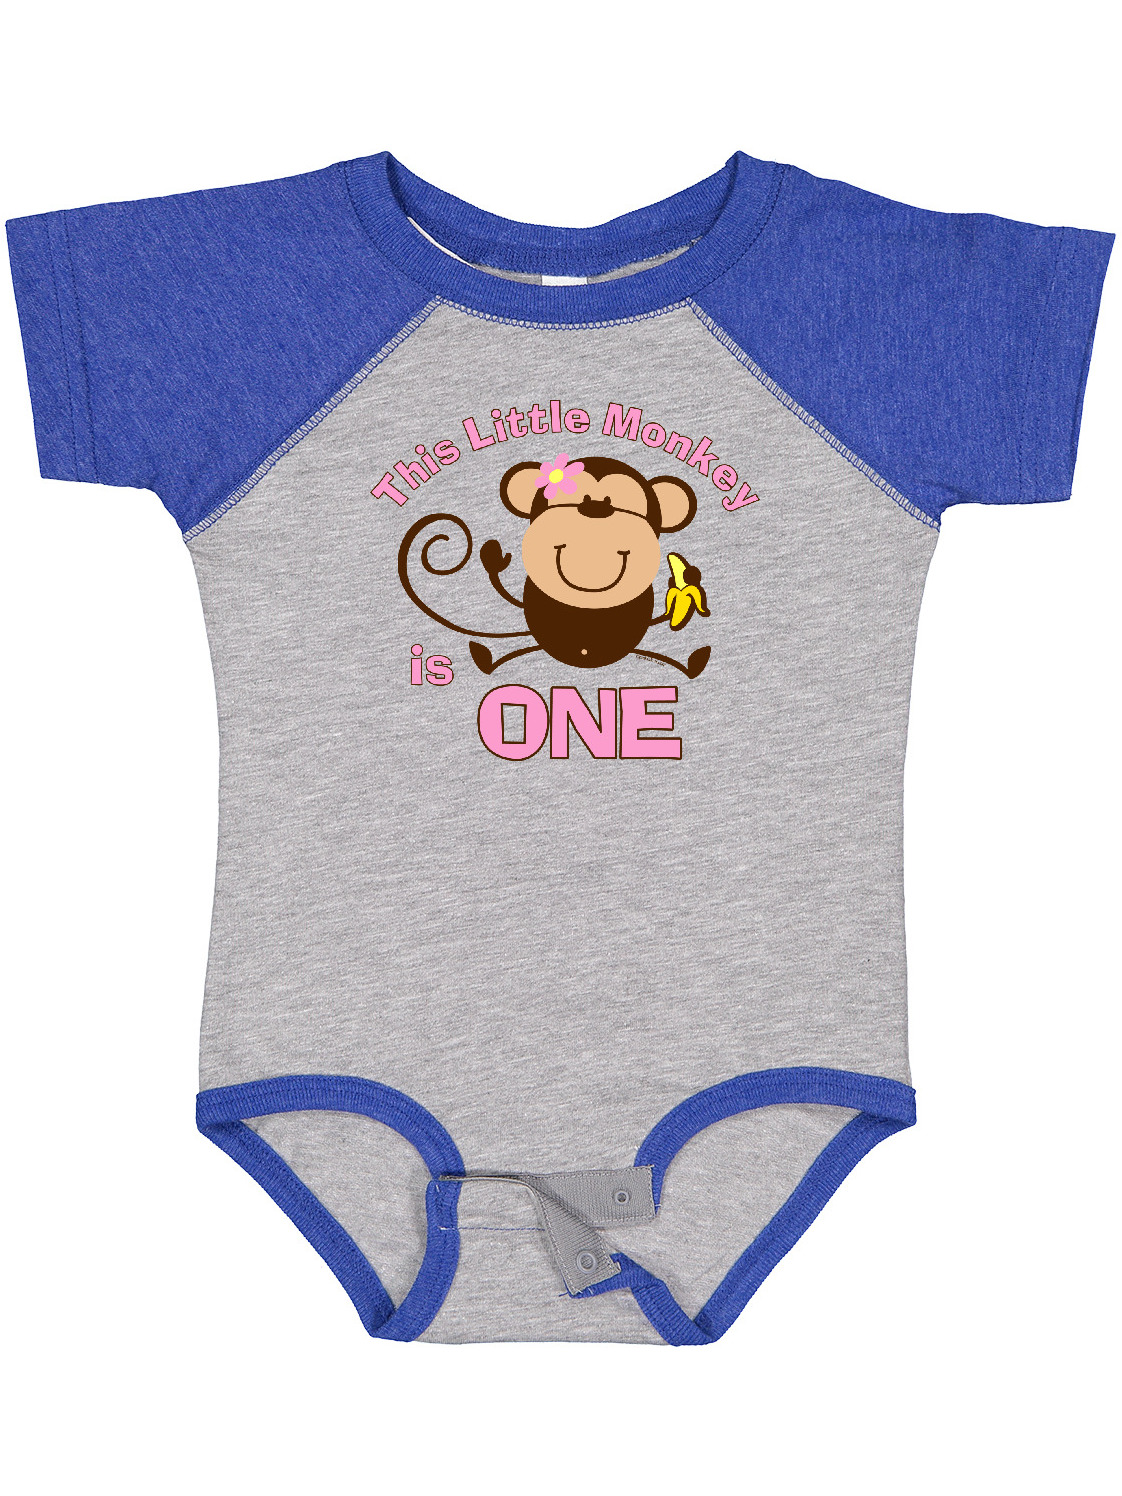 Inktastic Little Monkey Girl 1st Birthday Girls Baby Bodysuit - image 1 of 4